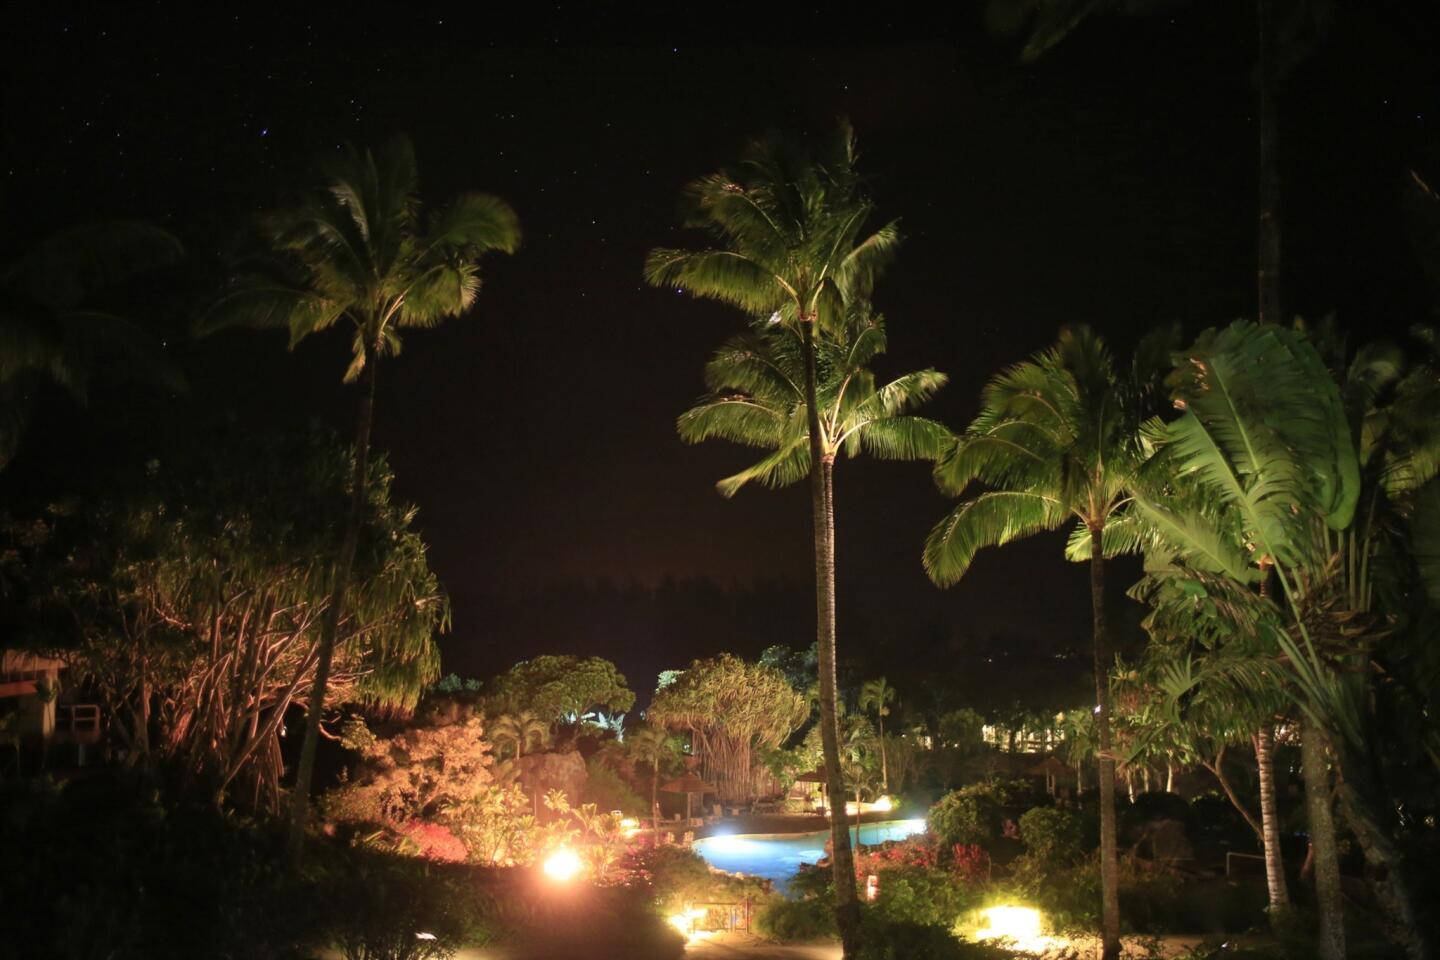 The Hanalei Bay Resort at night